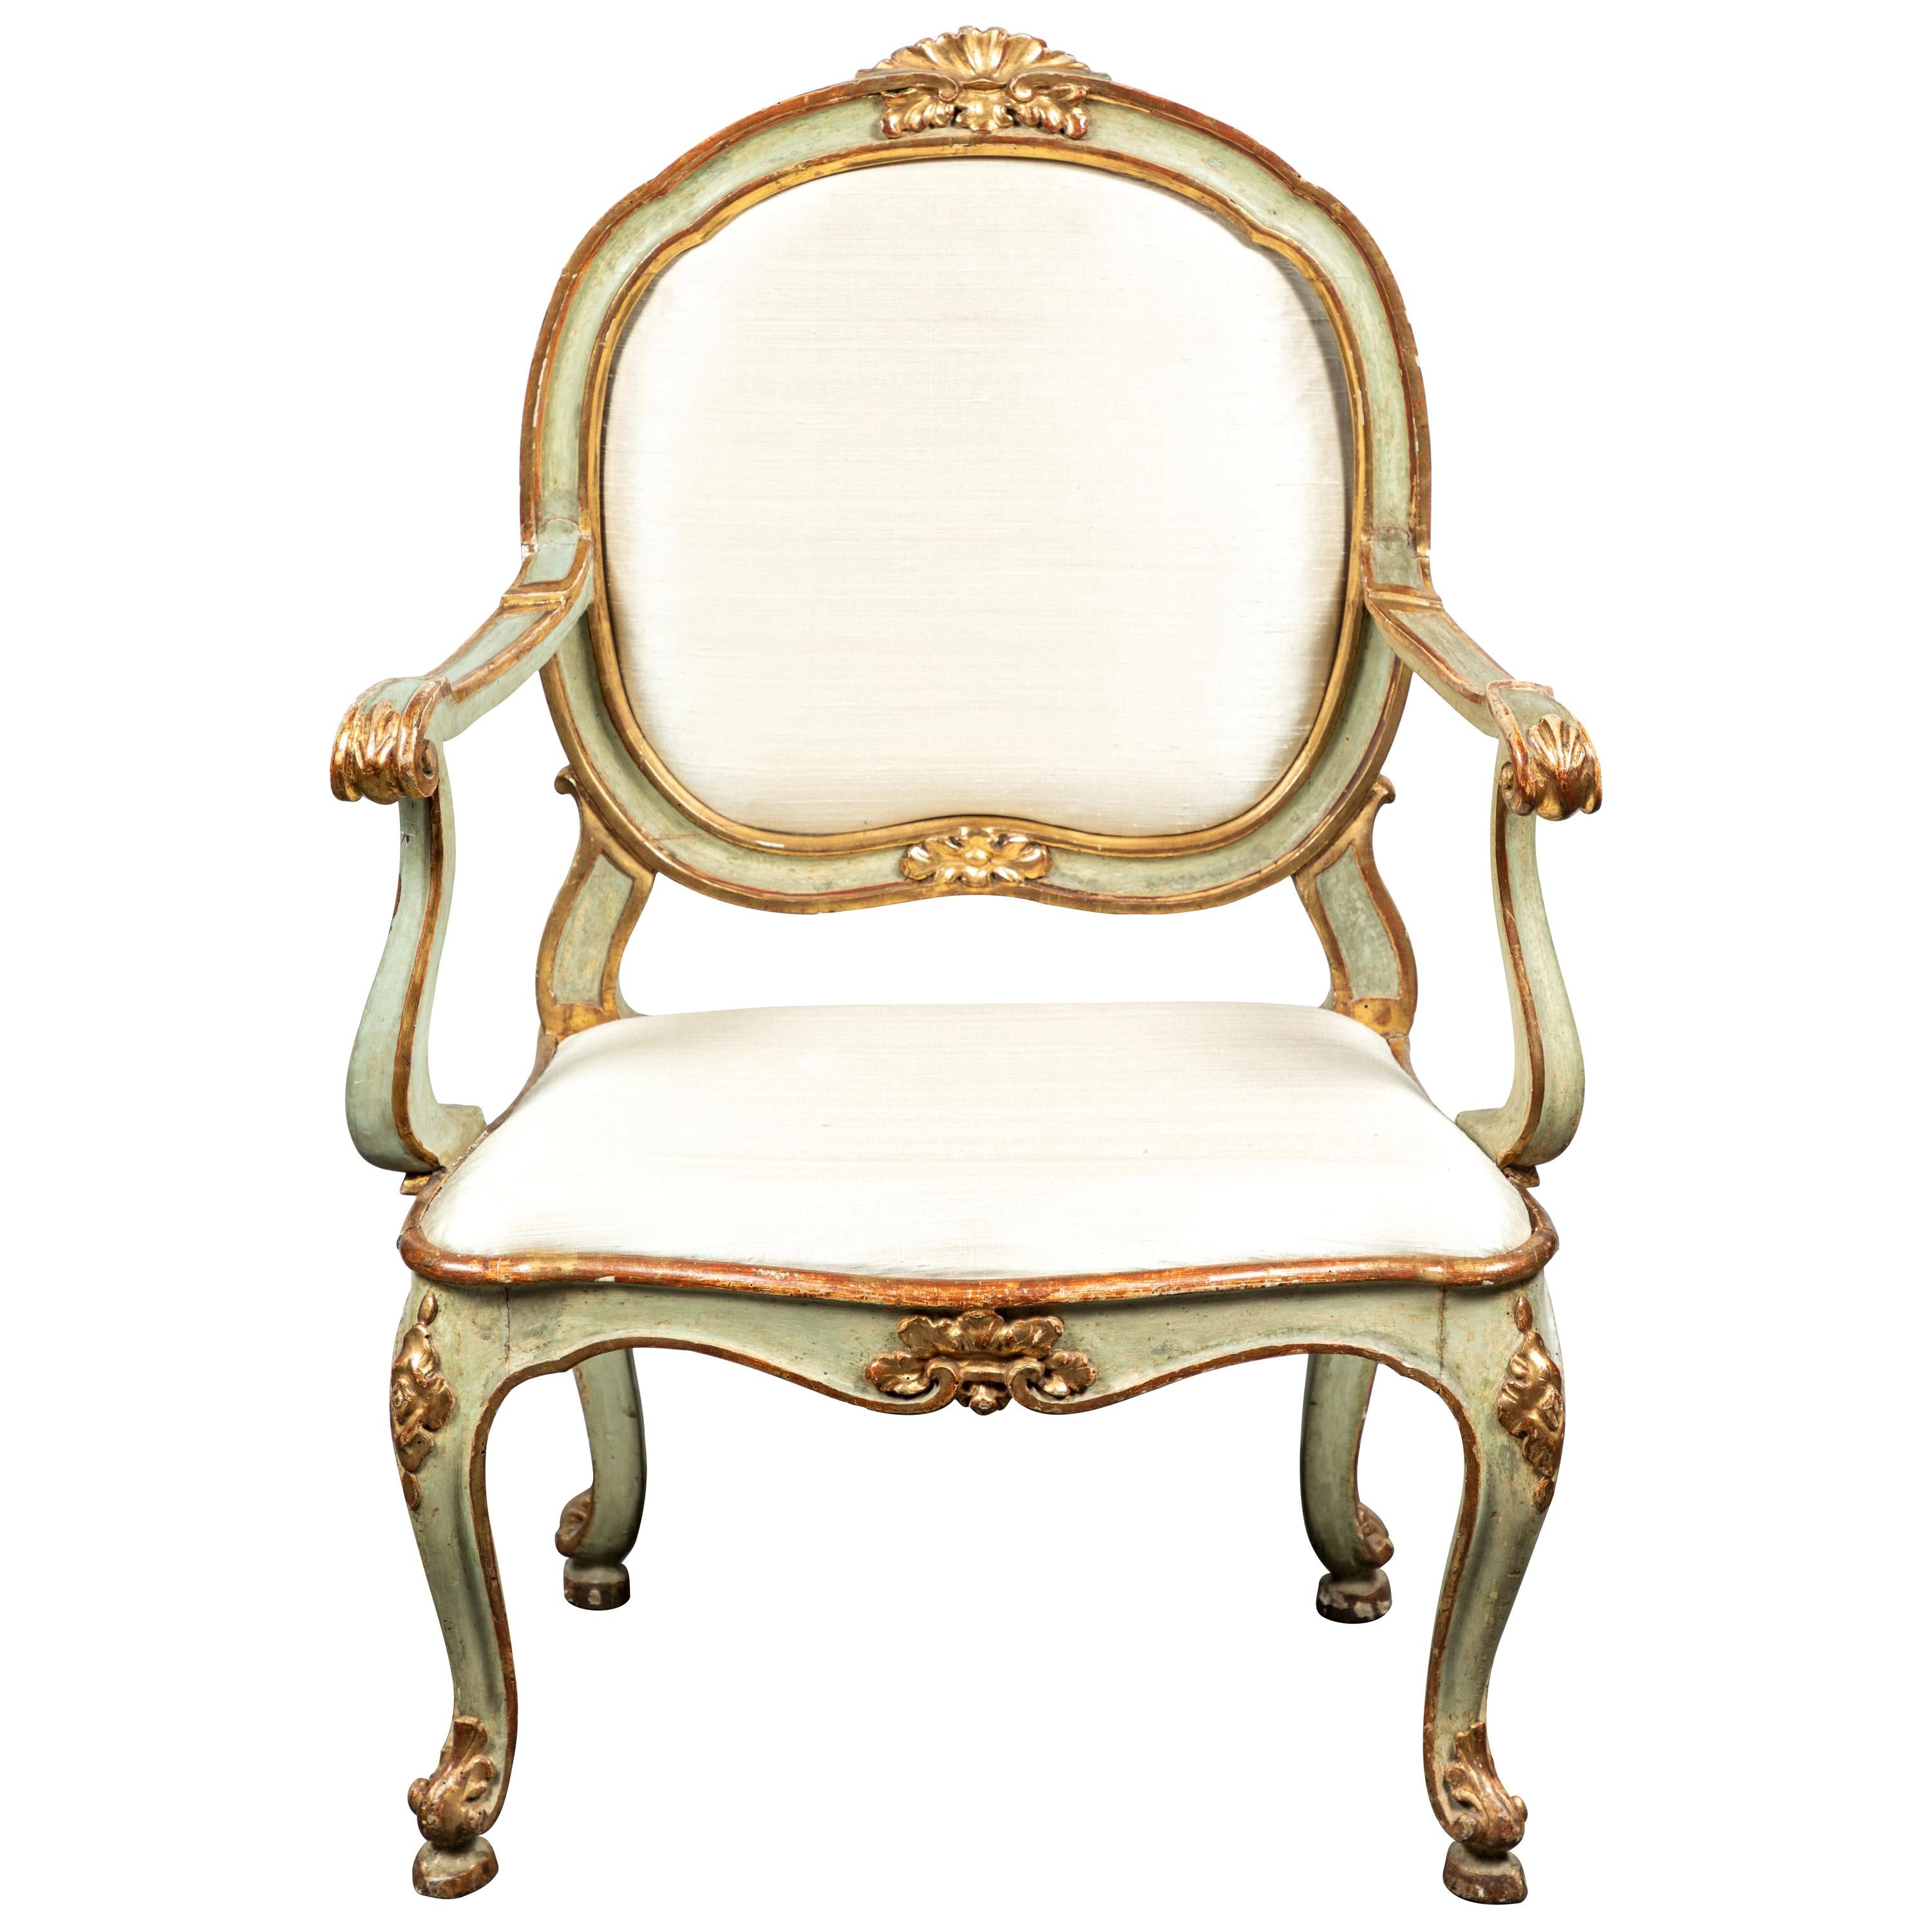 Period, Venetian, Painted Armchair